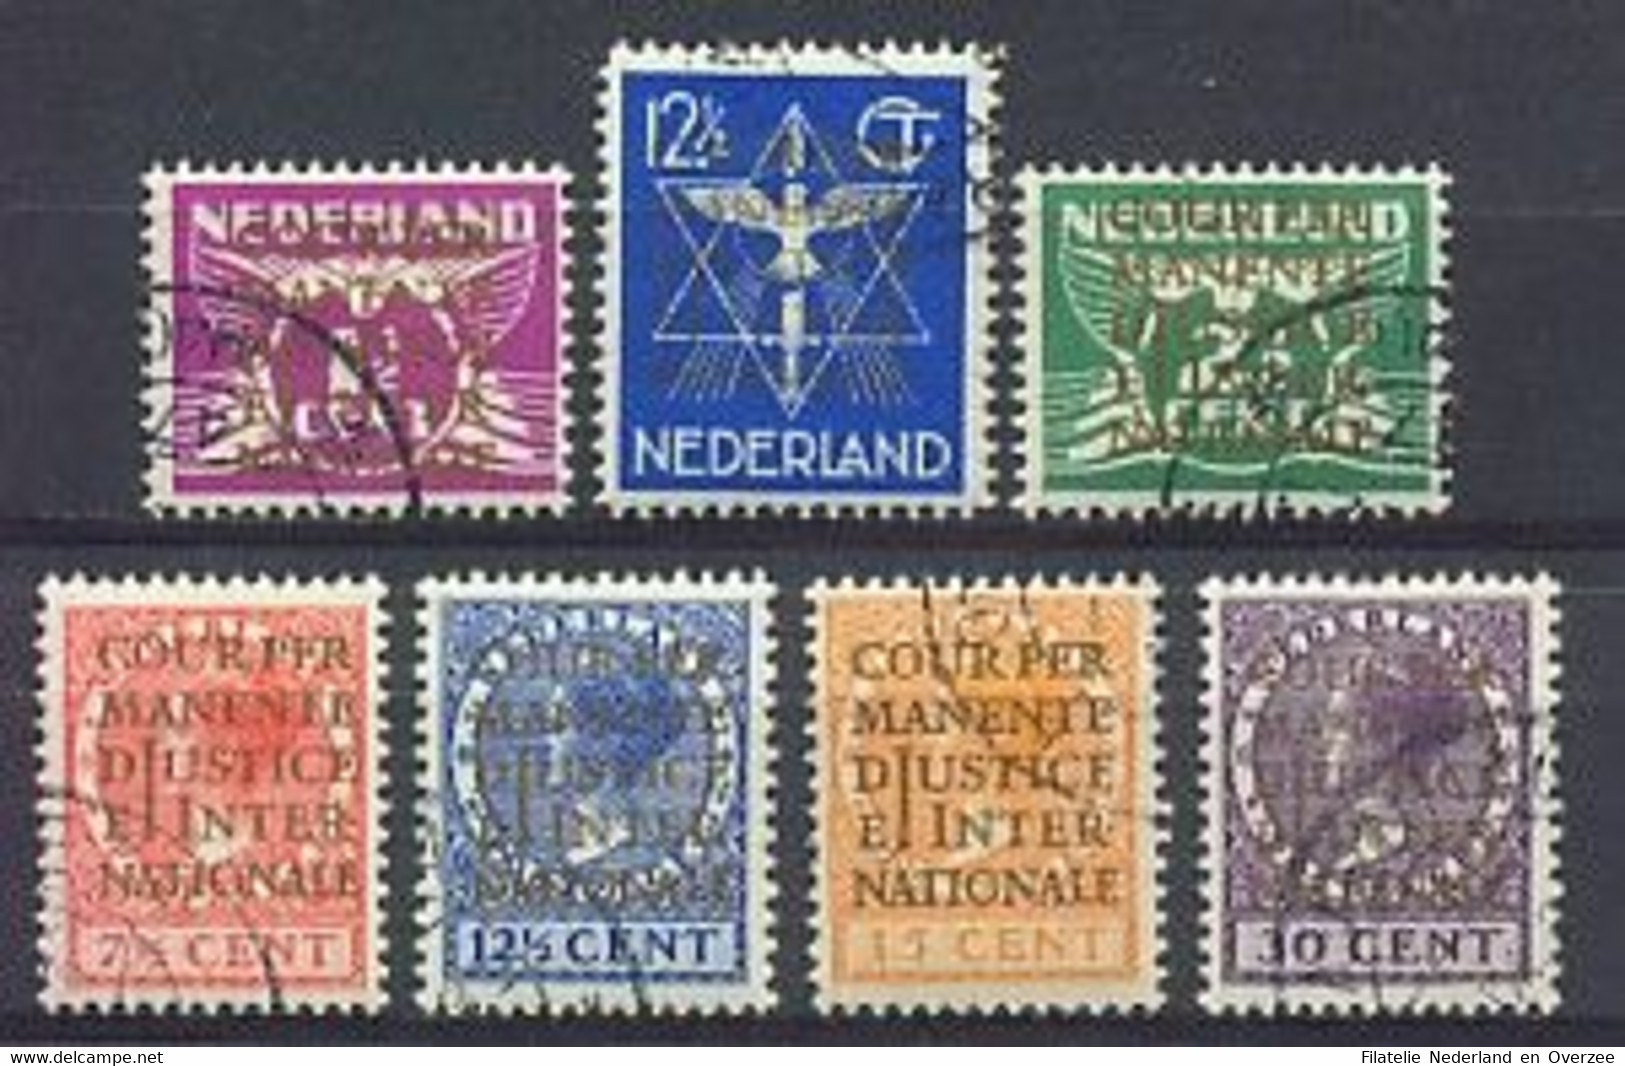 Nederland 1934-1938 Dienst 9/15 Gestempeld/Used Cour Permanente De Justice Internationale, Service Stamps - Servizio